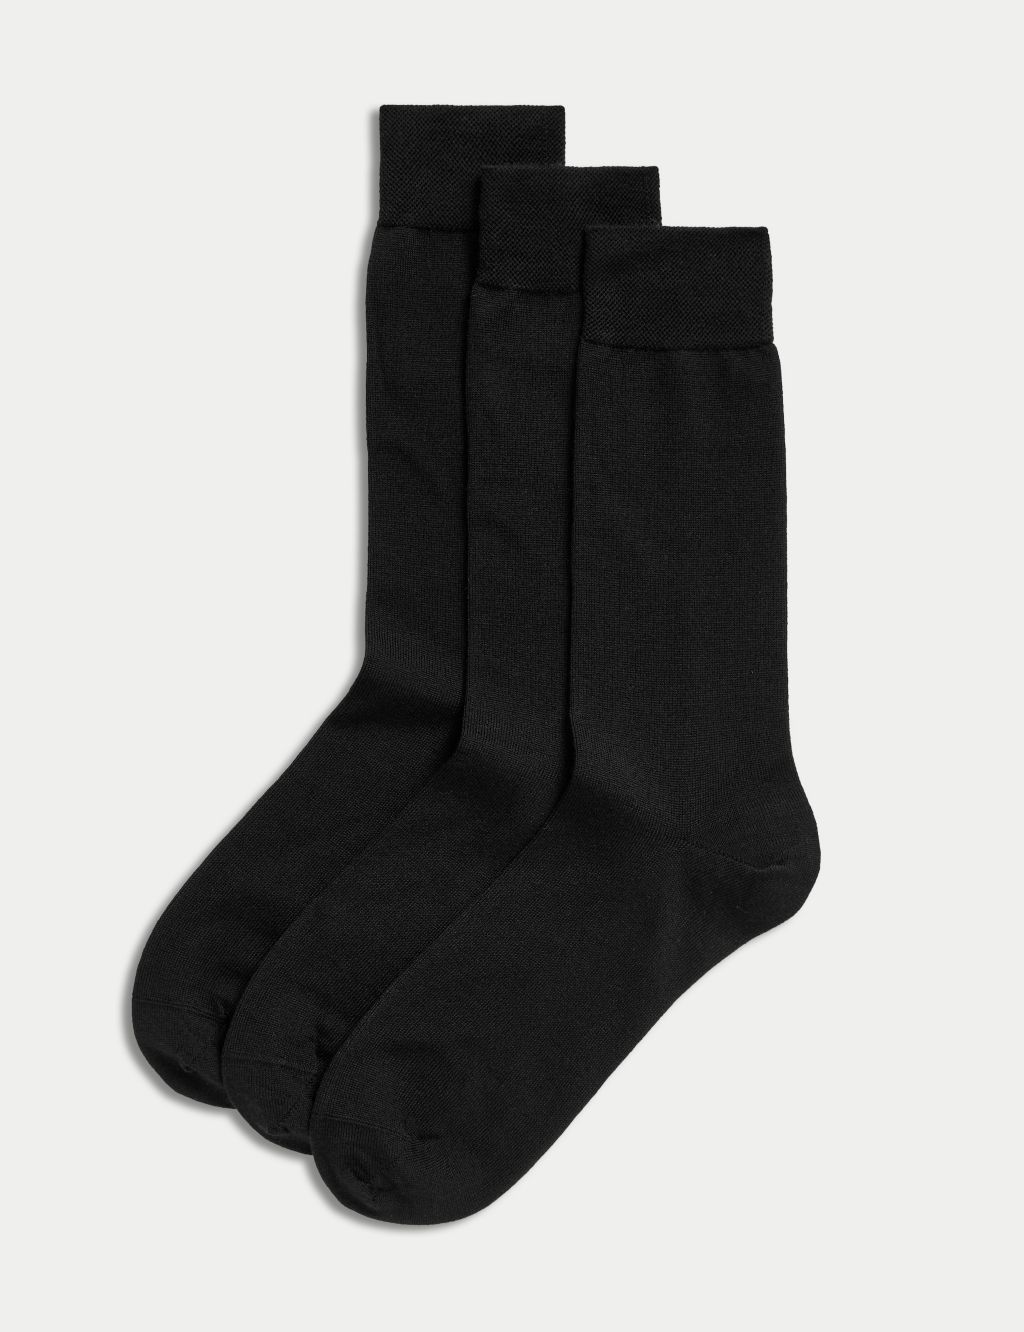 3pk Merino Wool Socks image 1